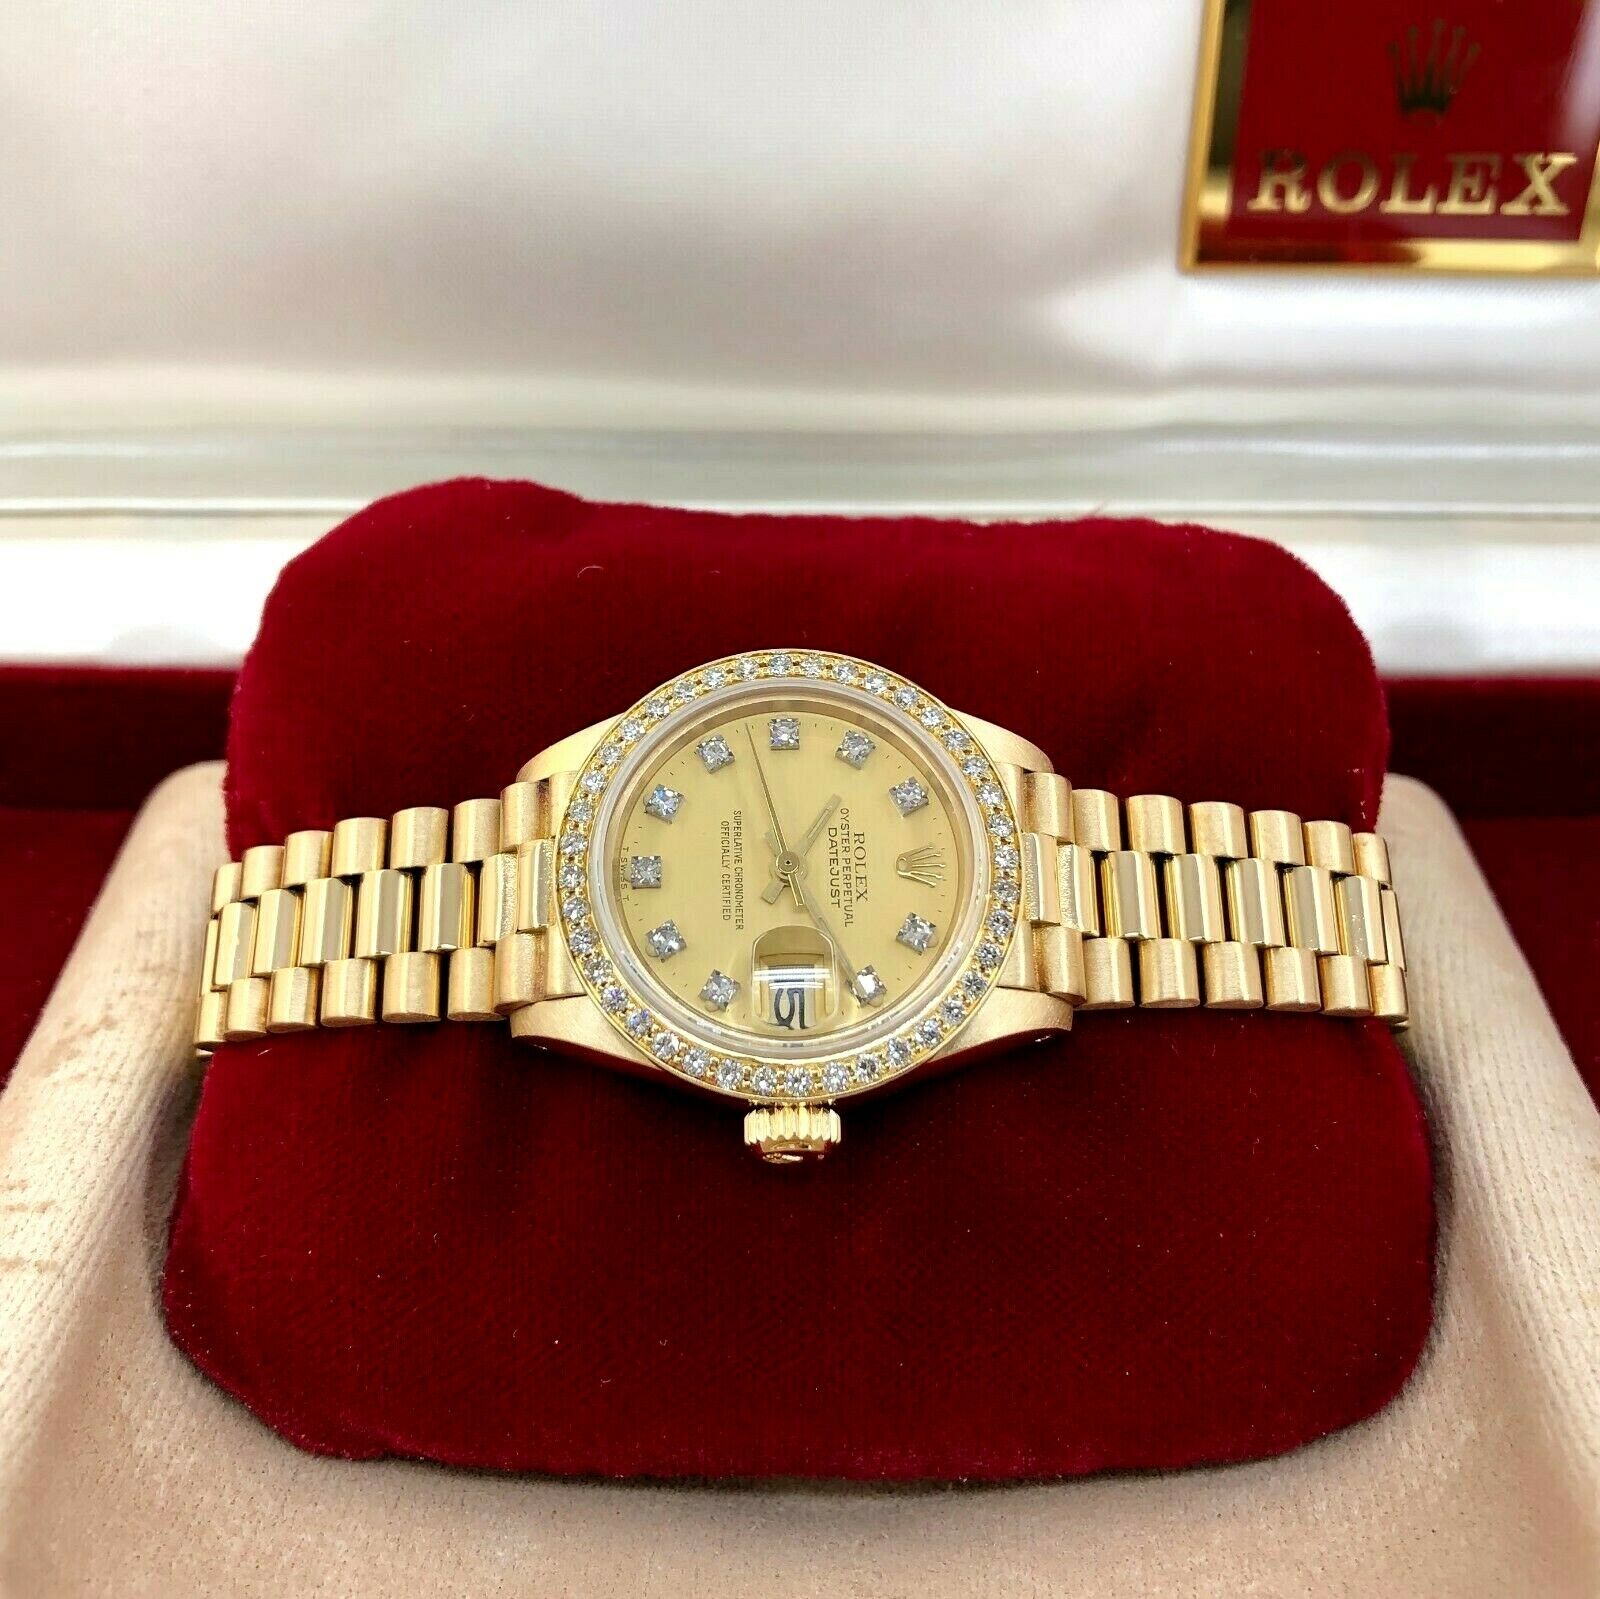 Rolex 6917 Ladies President 18k Mid size 26mm Diamond Bezel Diamond dial